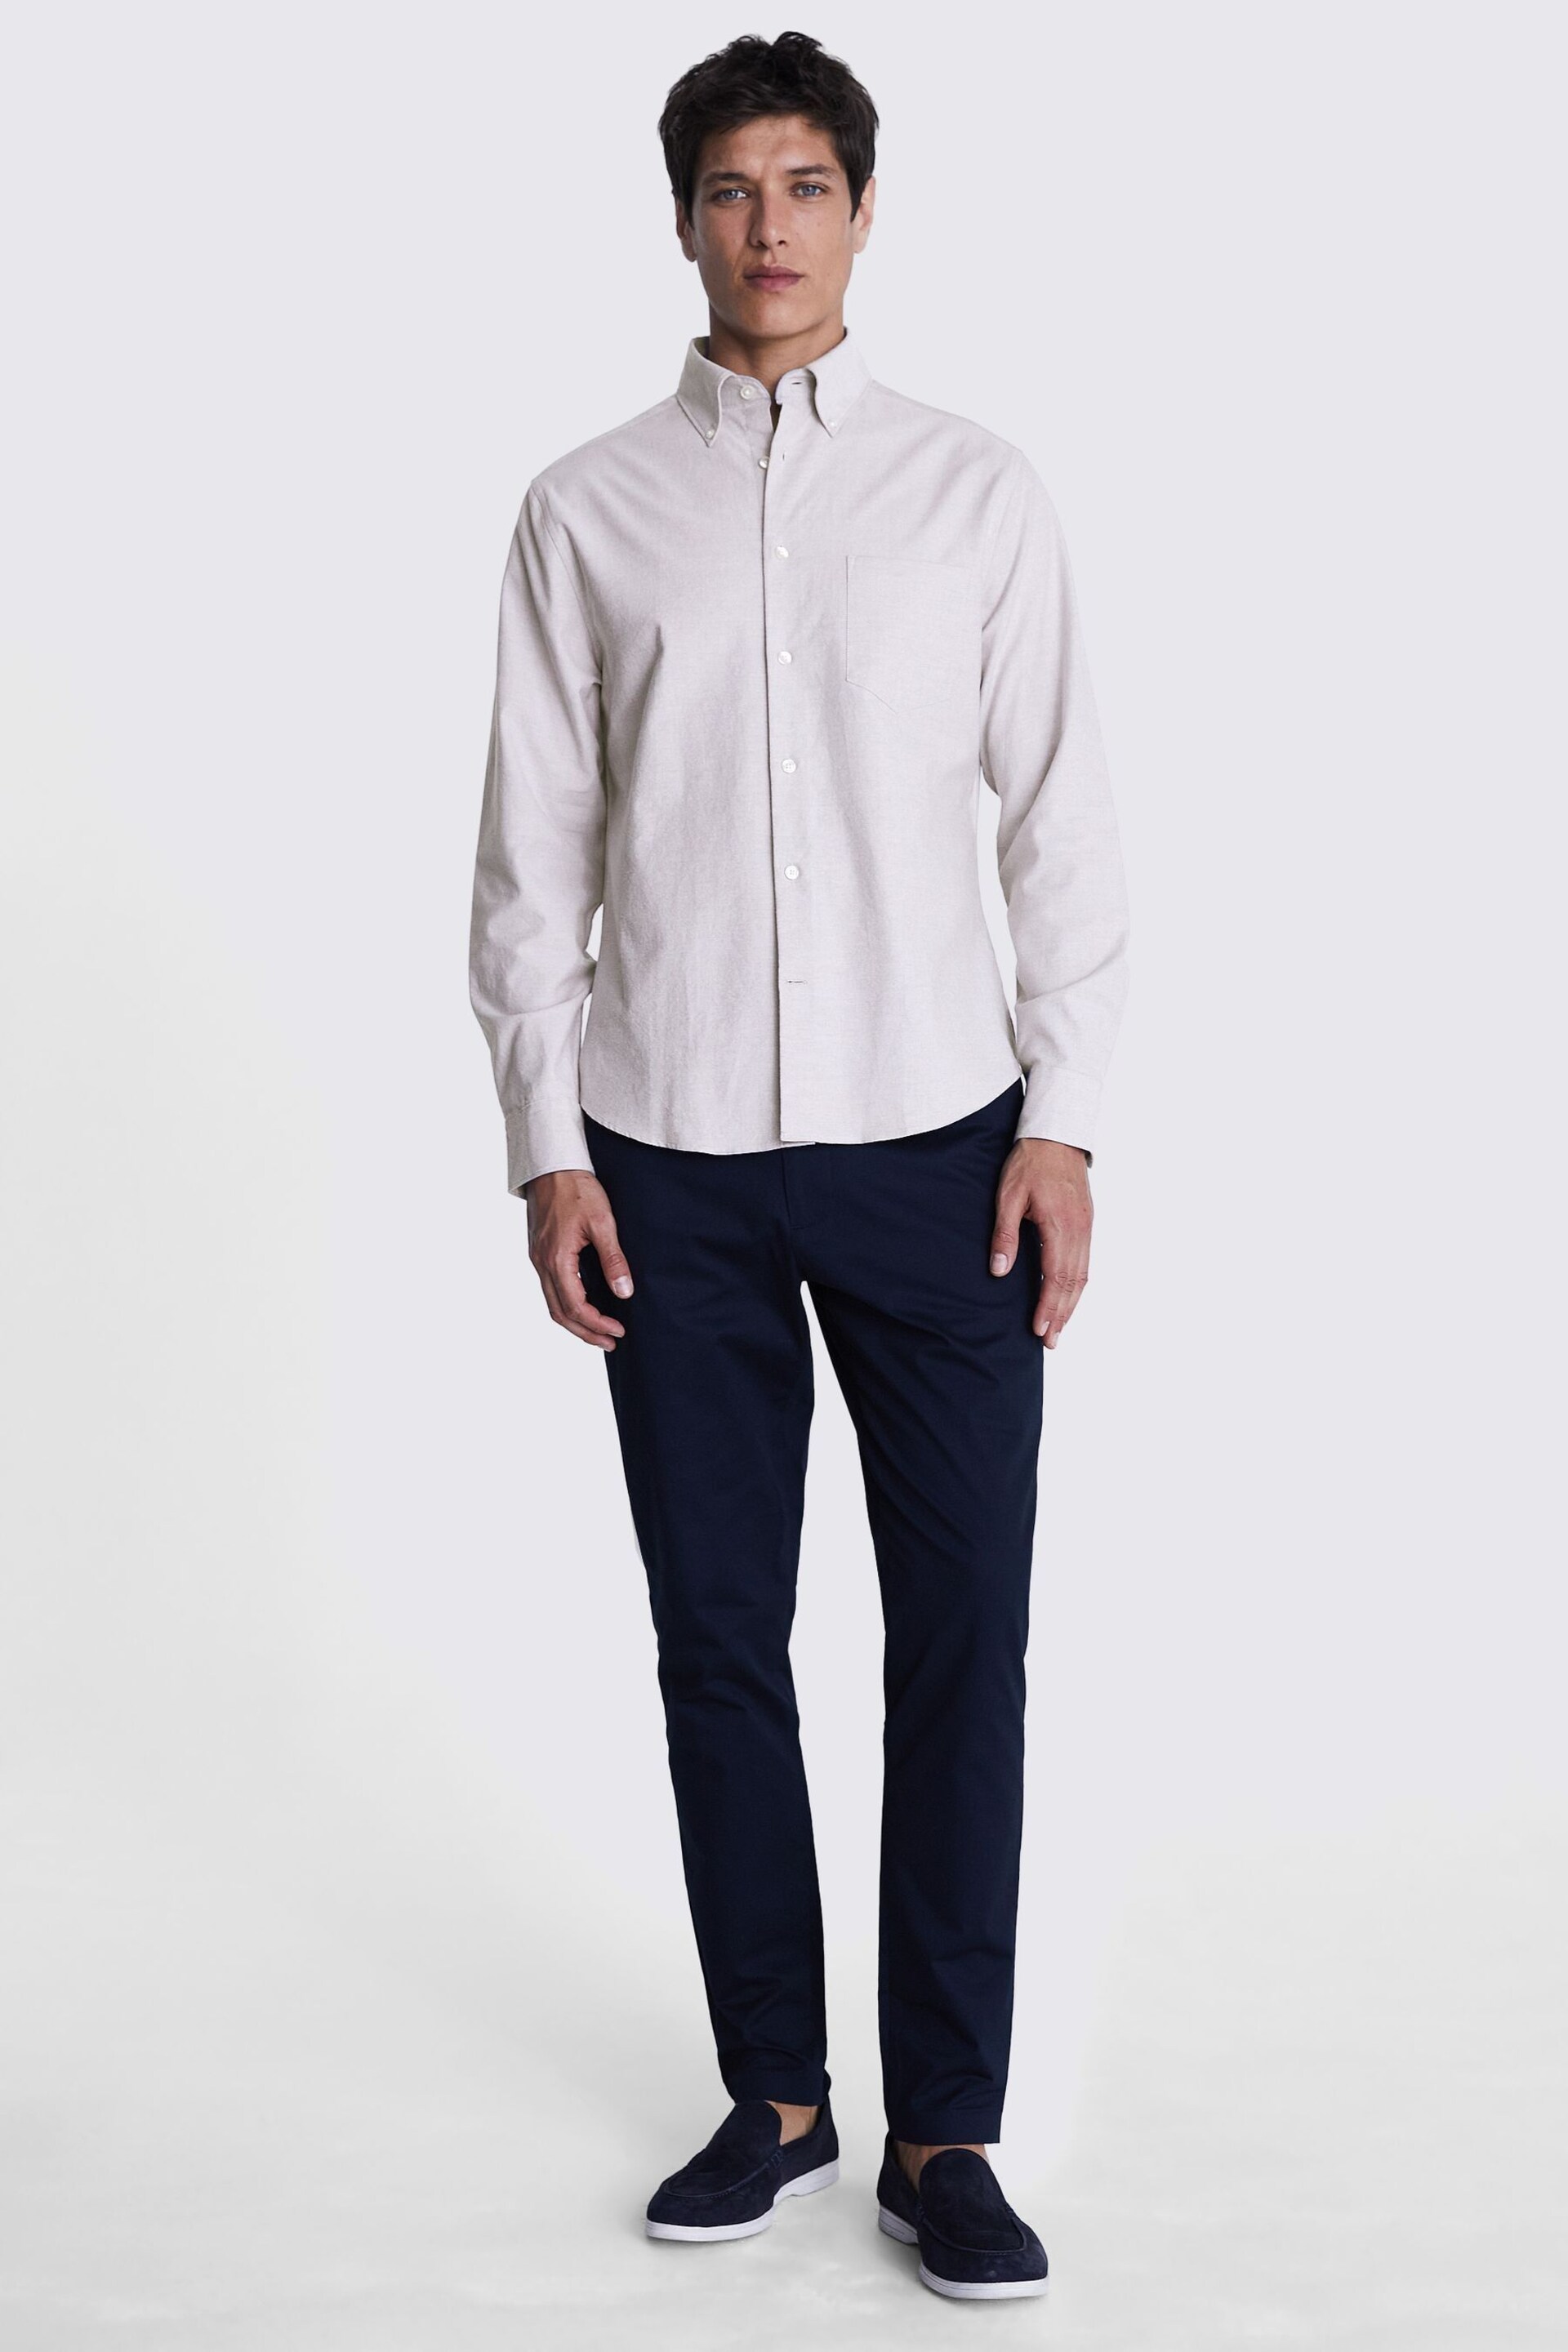 MOSS White/Grey Washed Oxford Shirt - Image 2 of 5